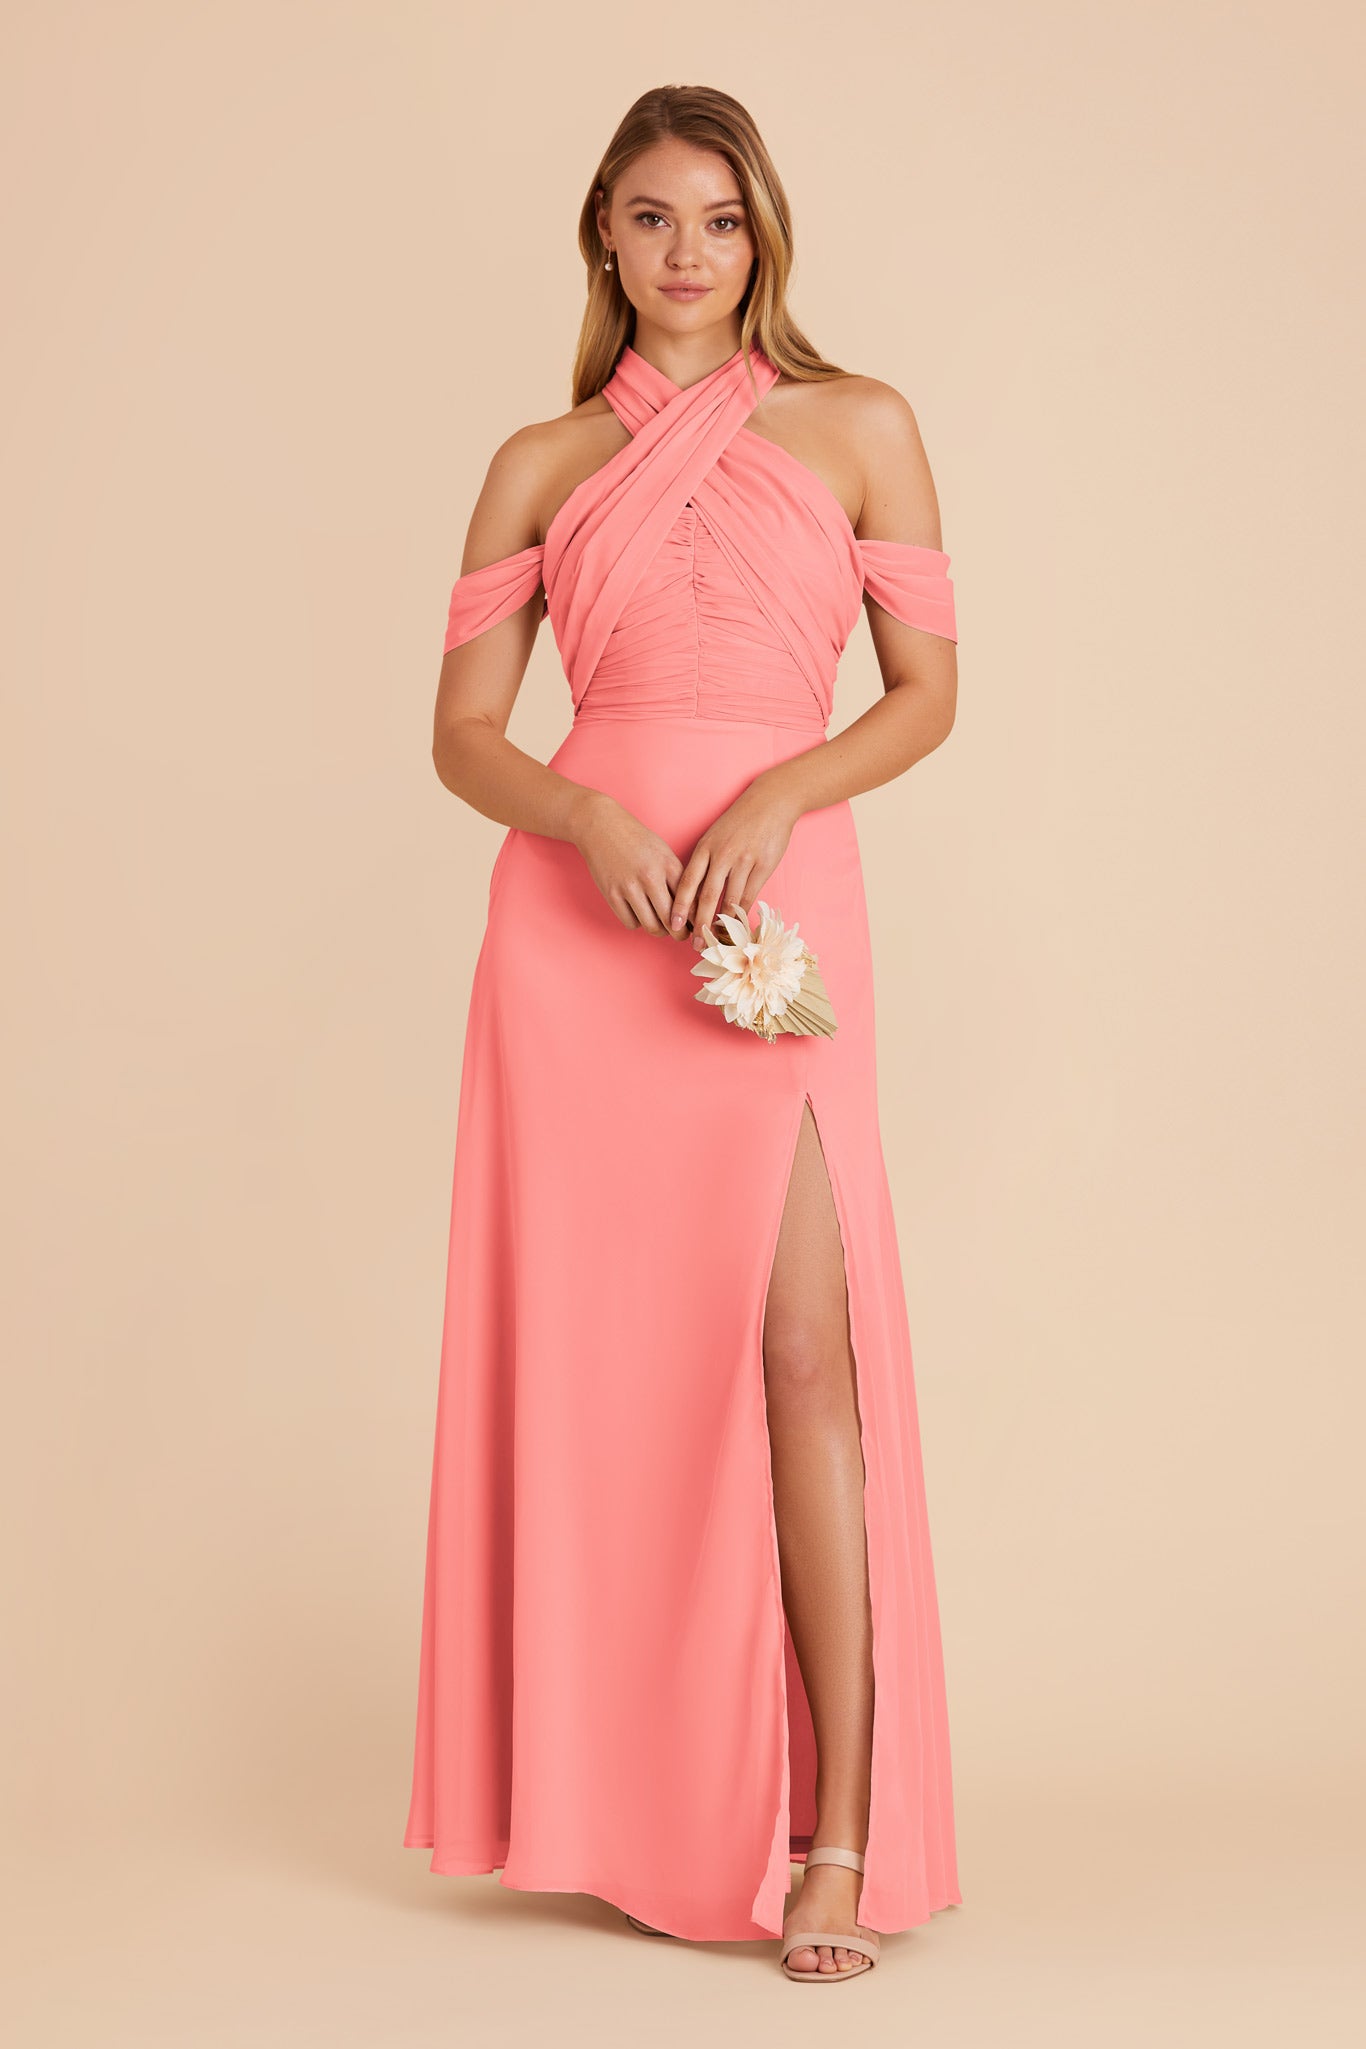 Coral Pink Cara Chiffon Dress by Birdy Grey